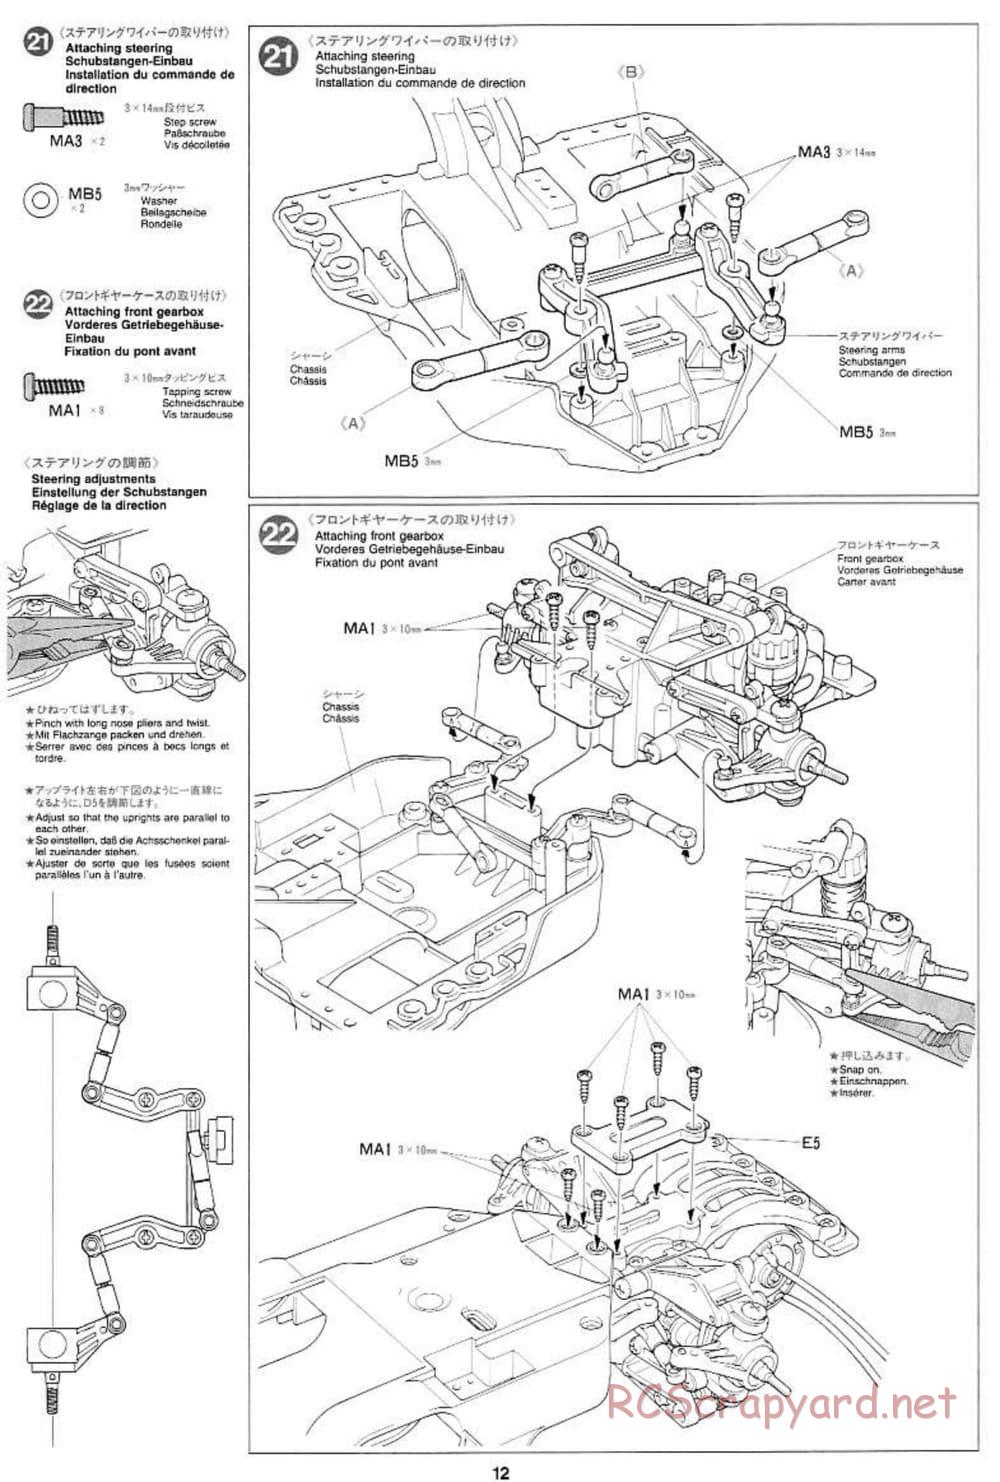 Tamiya - Toyota Corolla WRC - TA-03FS Chassis - Manual - Page 12